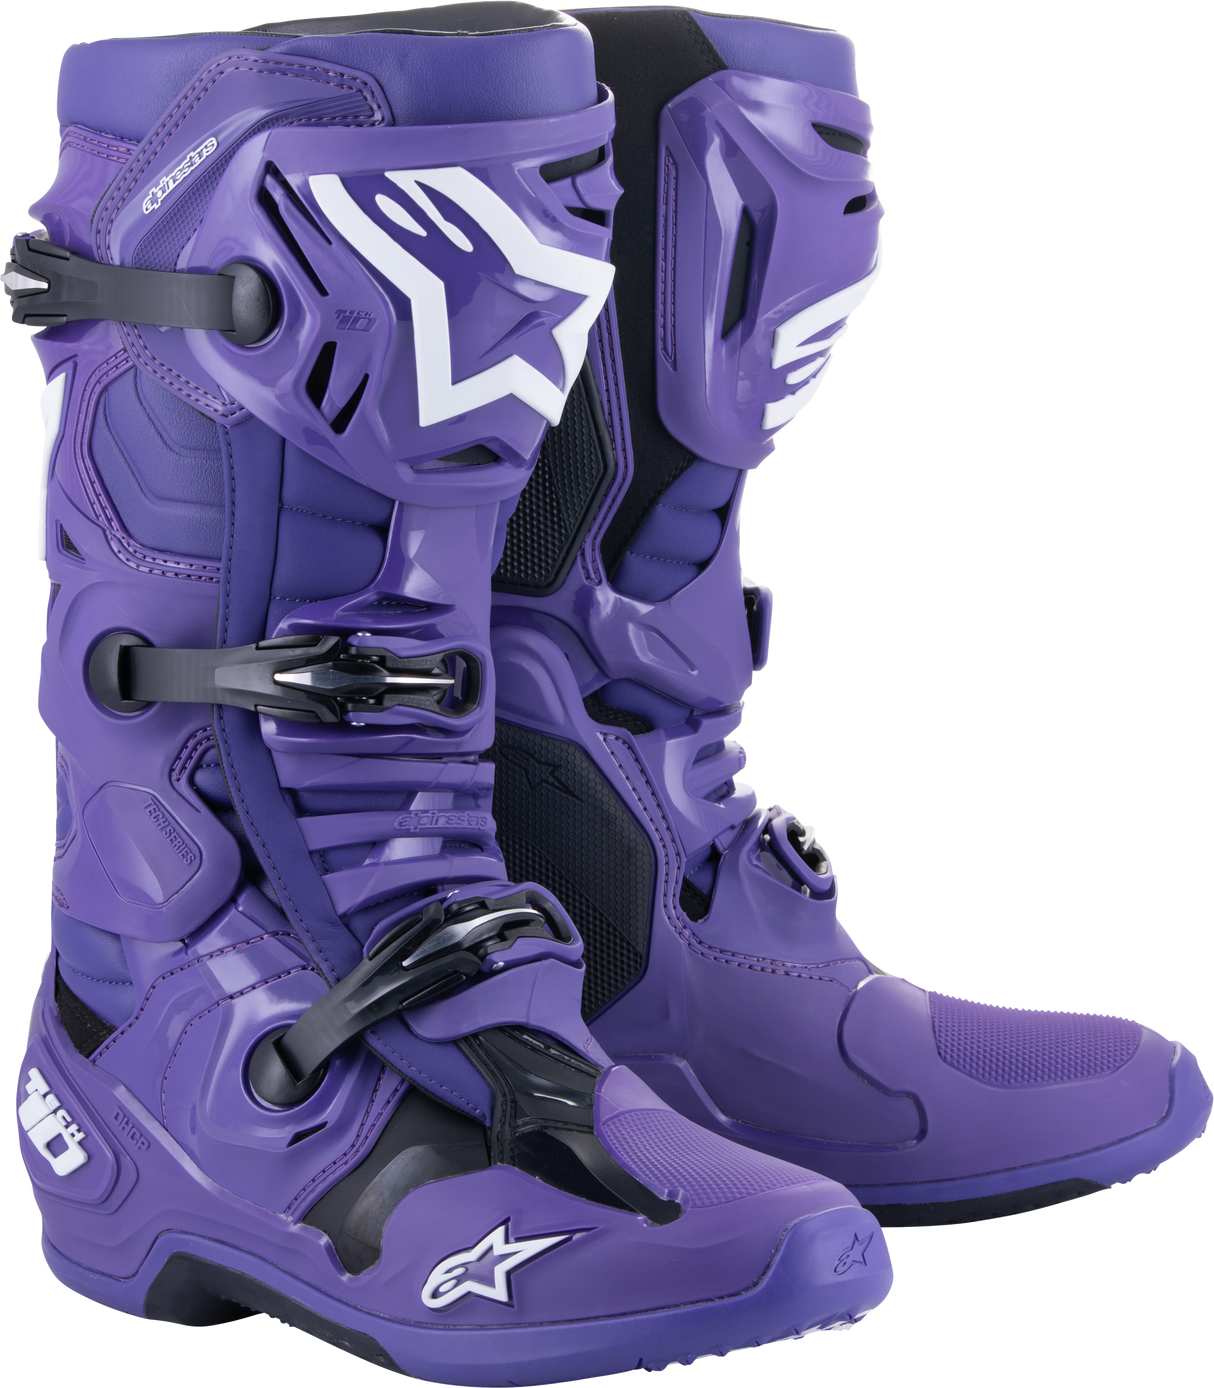 Tech 10 Boots Ultraviolet Black Sz 13